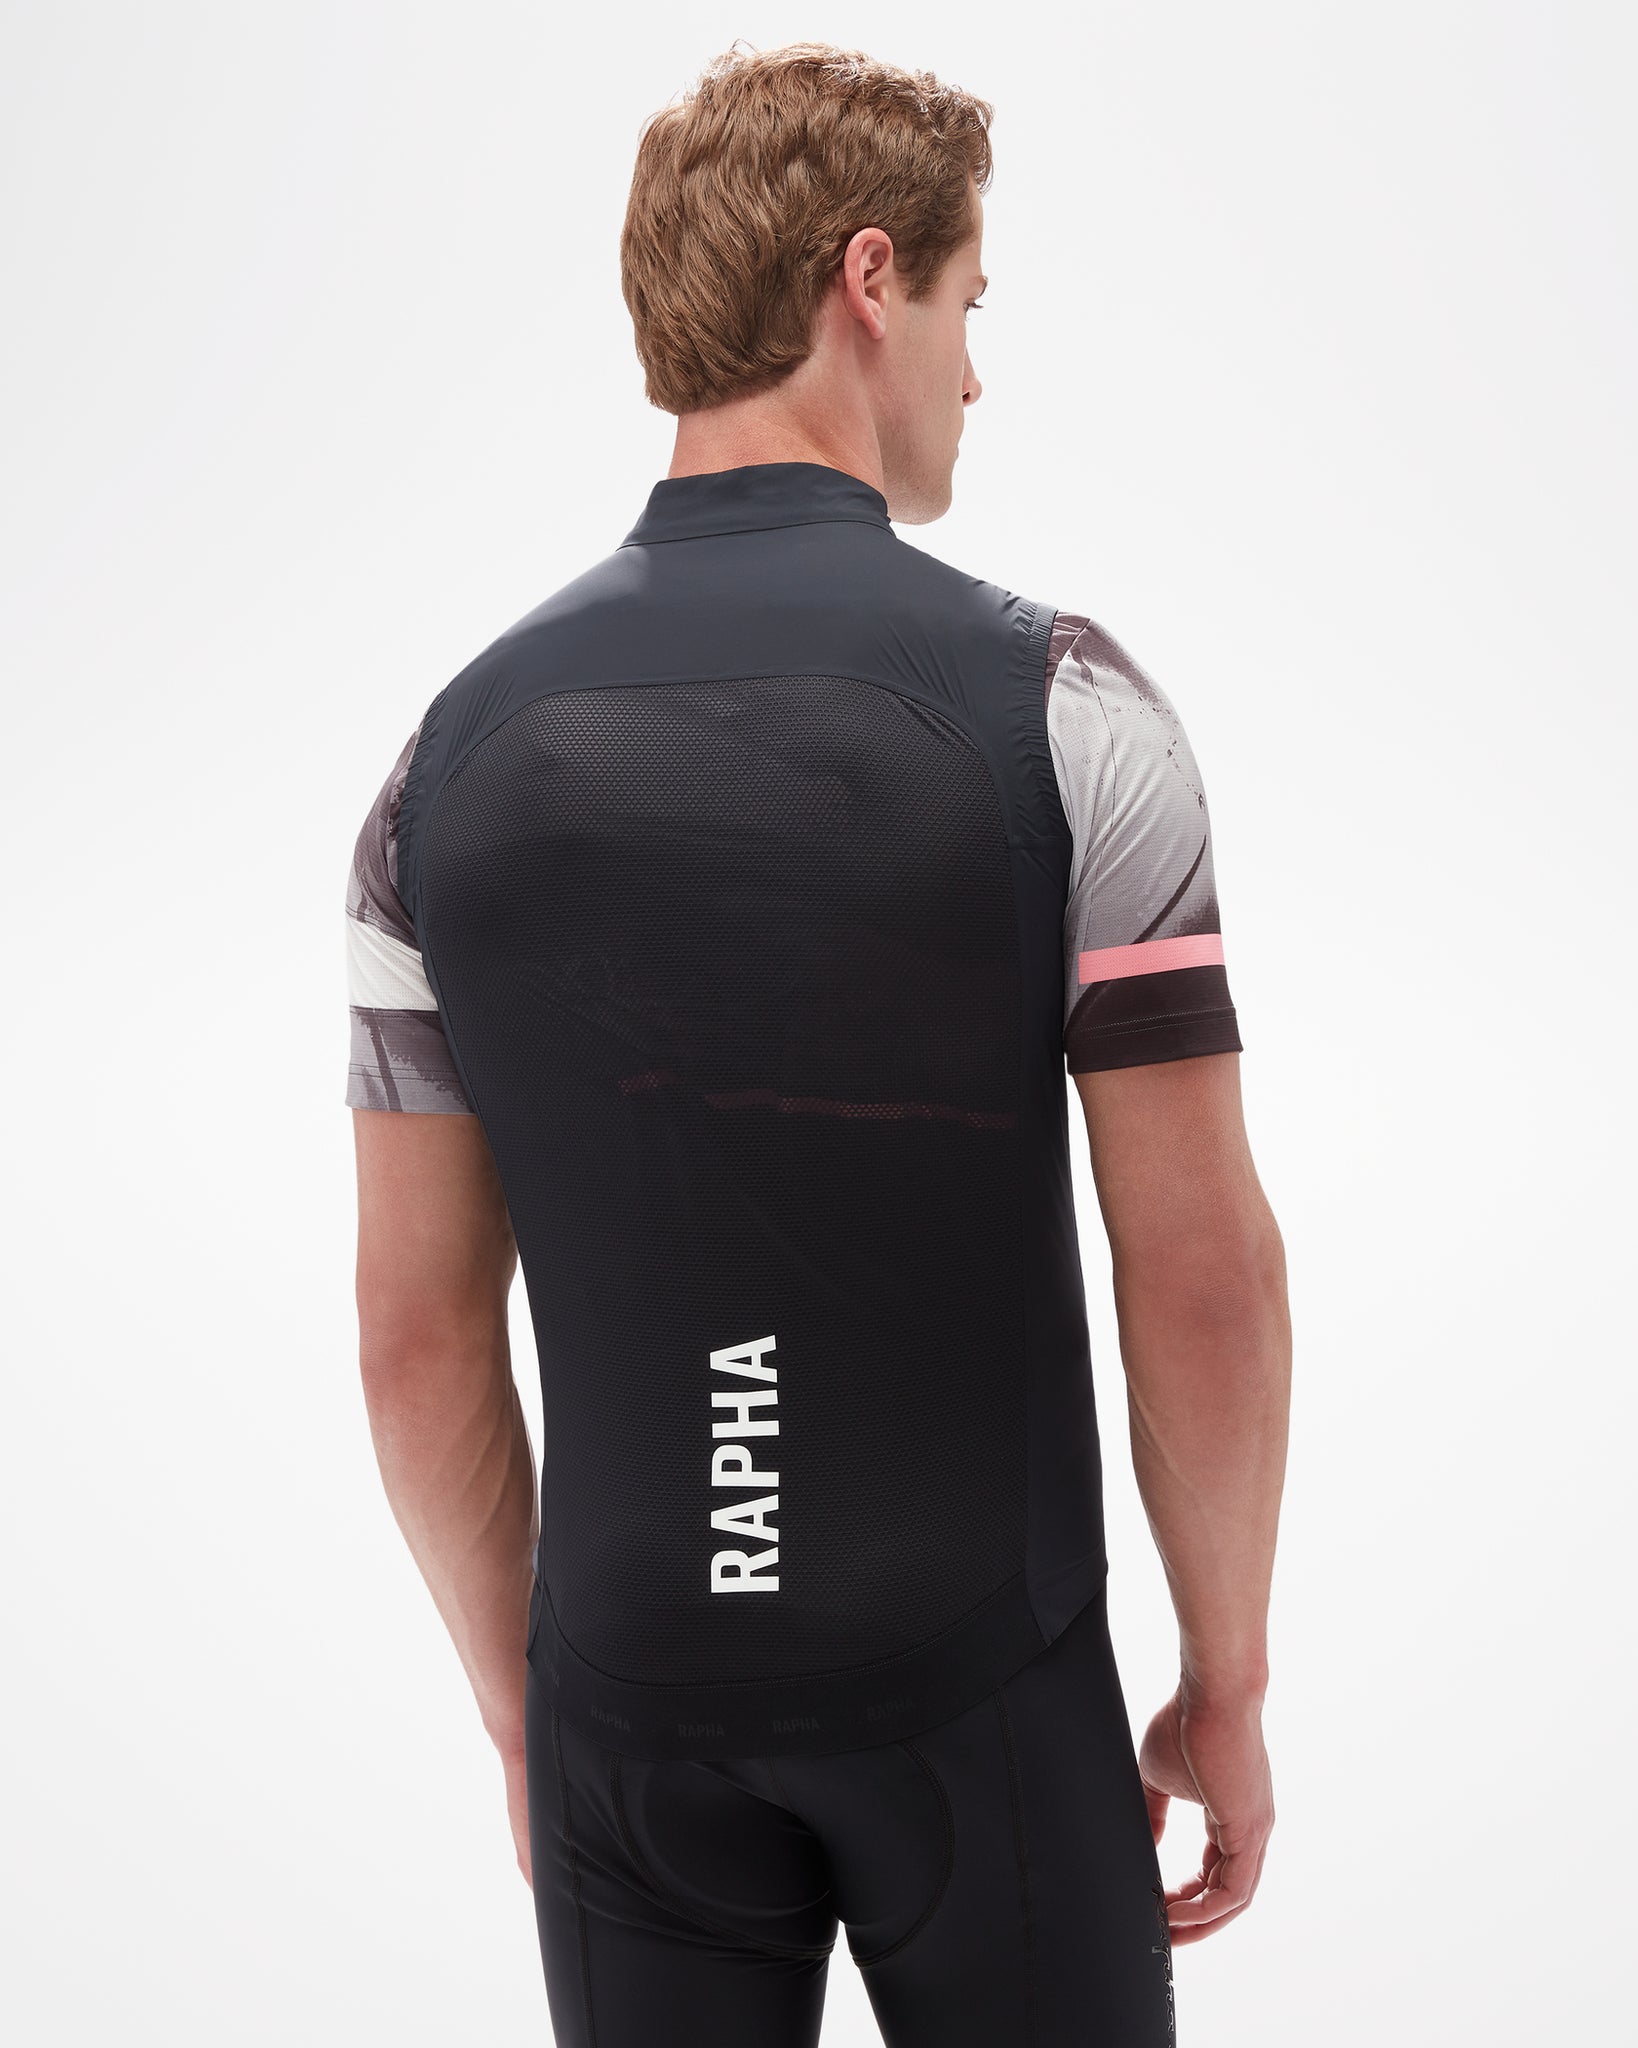 ASPENX Rapha Men's Gilet Vest | Premium Cycling Apparel